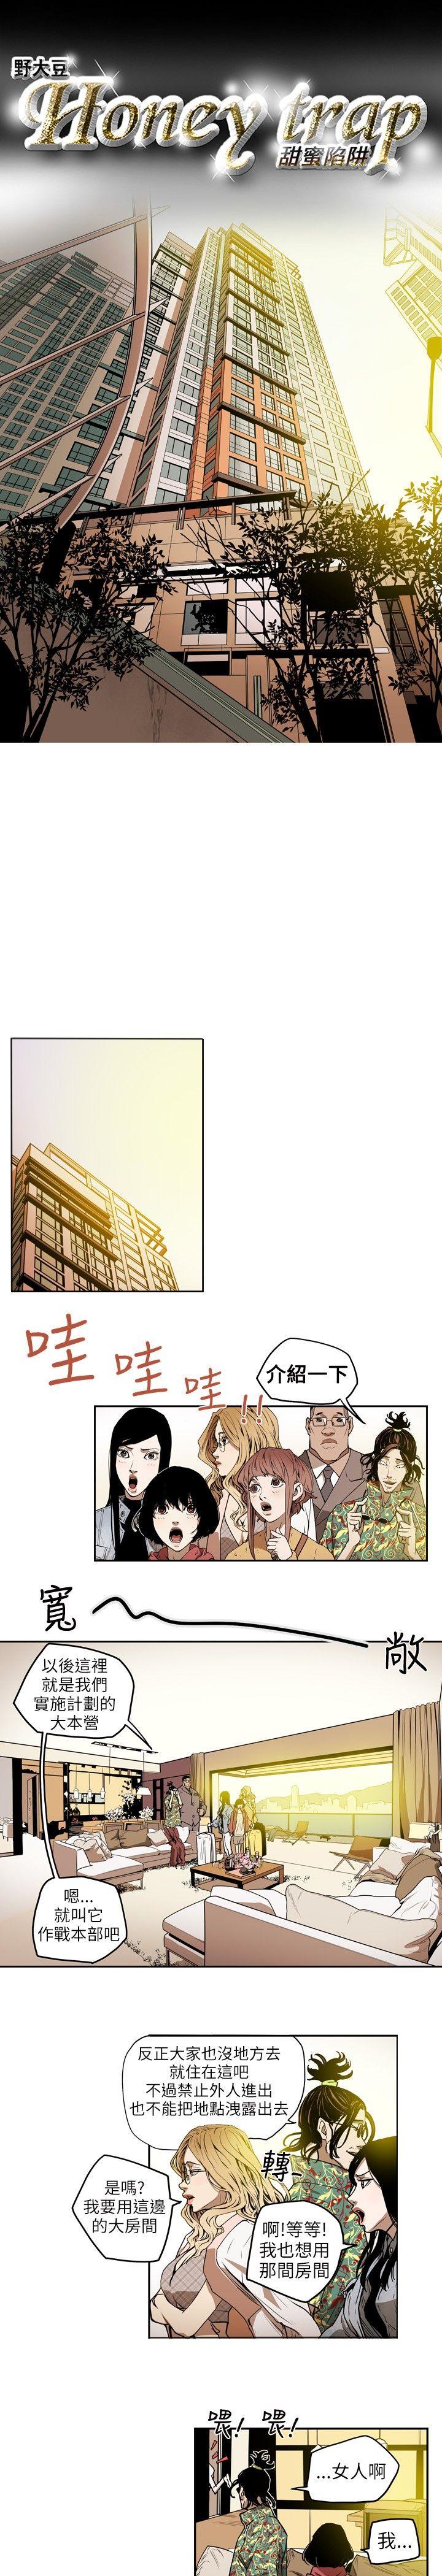 Honey trap 甜蜜陷阱  第7话 漫画图片2.jpg